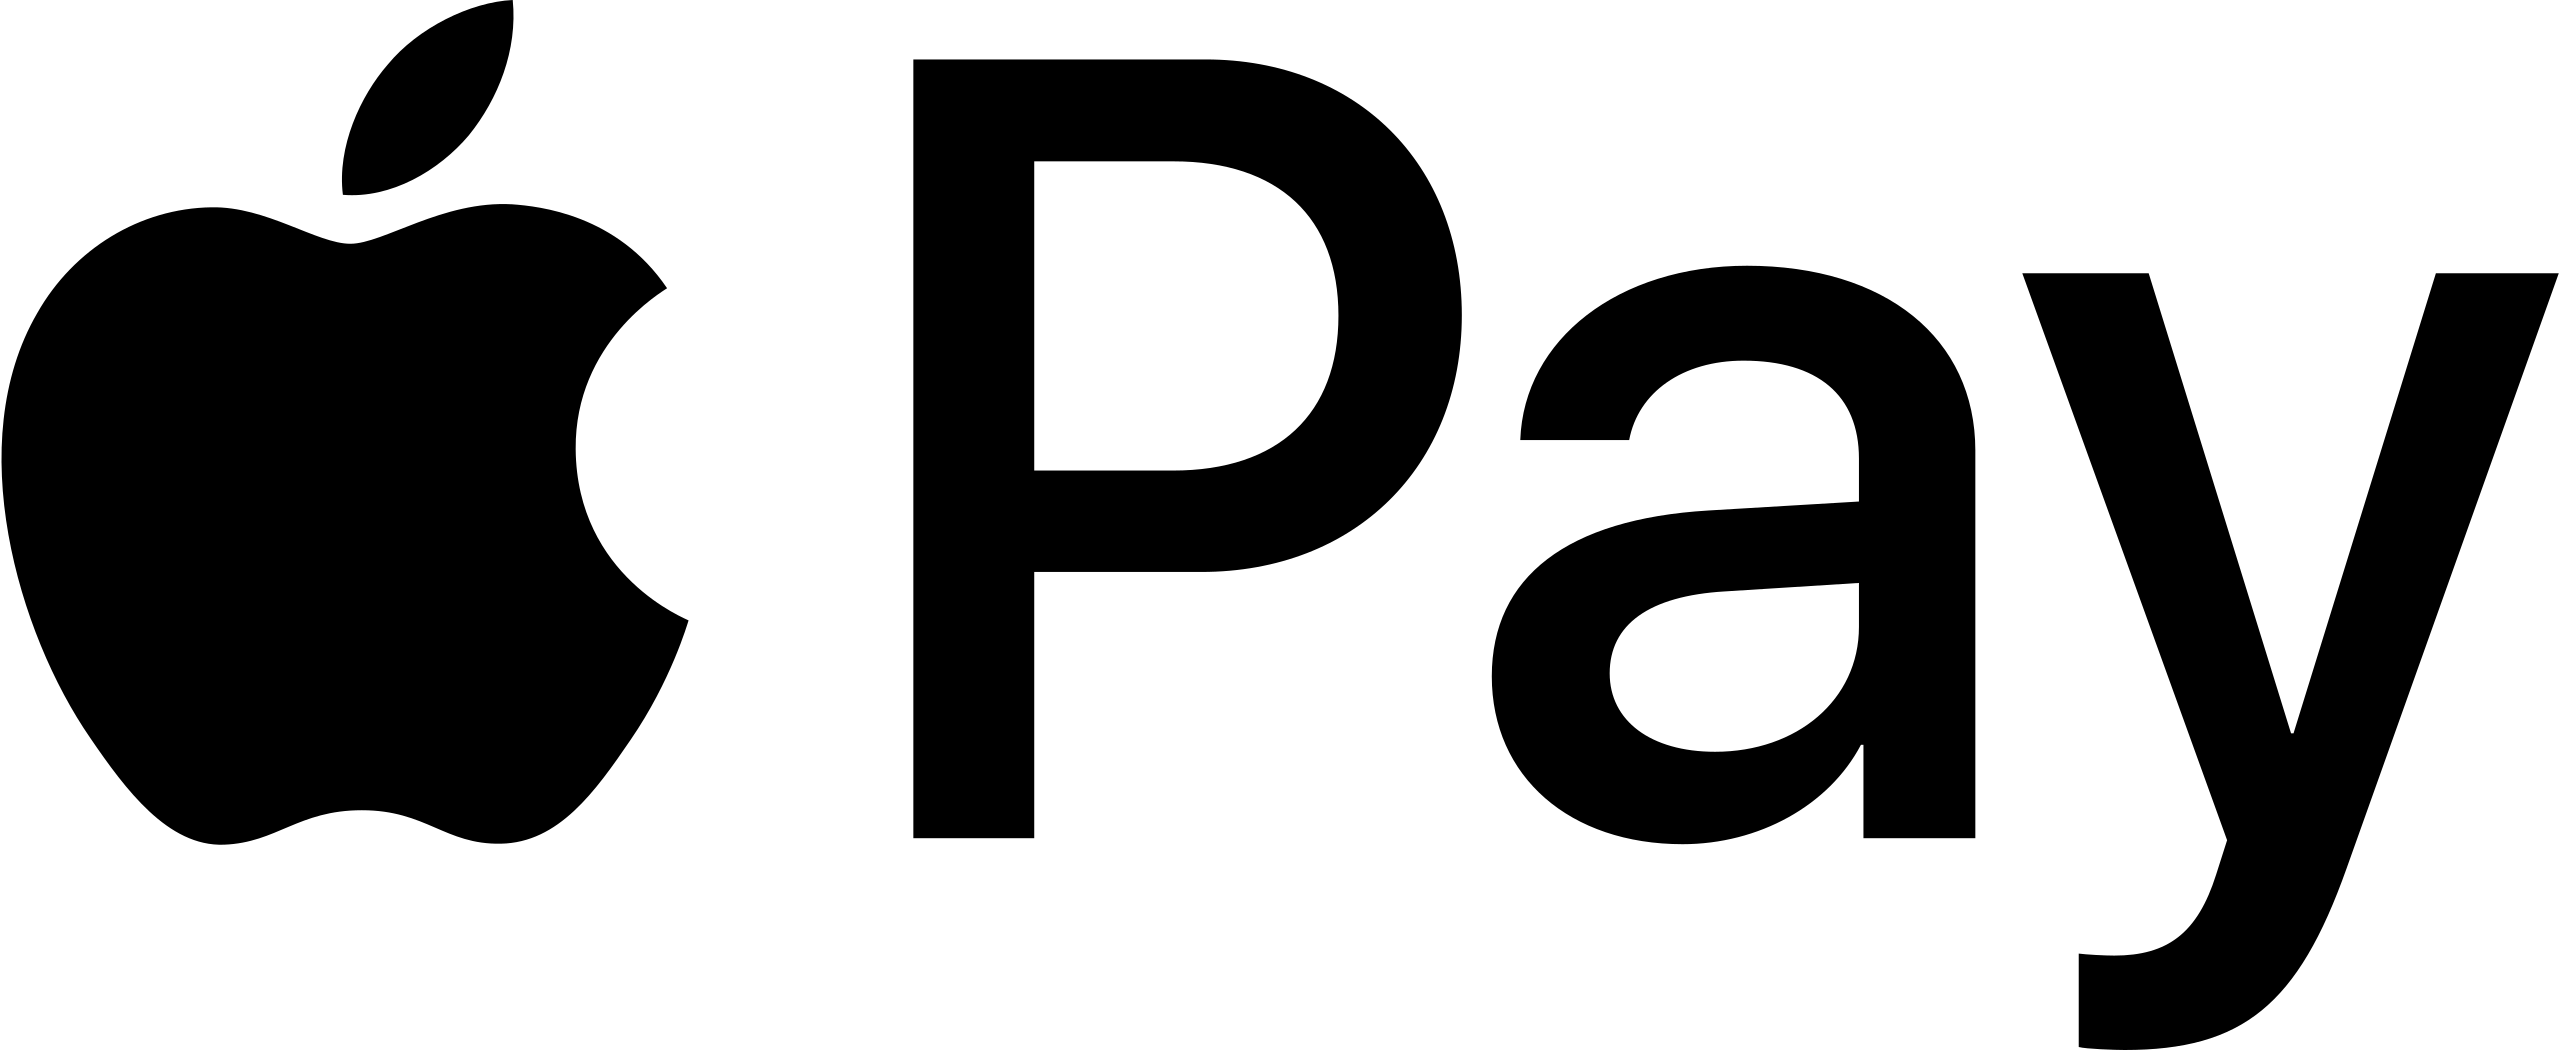 File:Apple Pay logo.svg - Wikimedia Commons